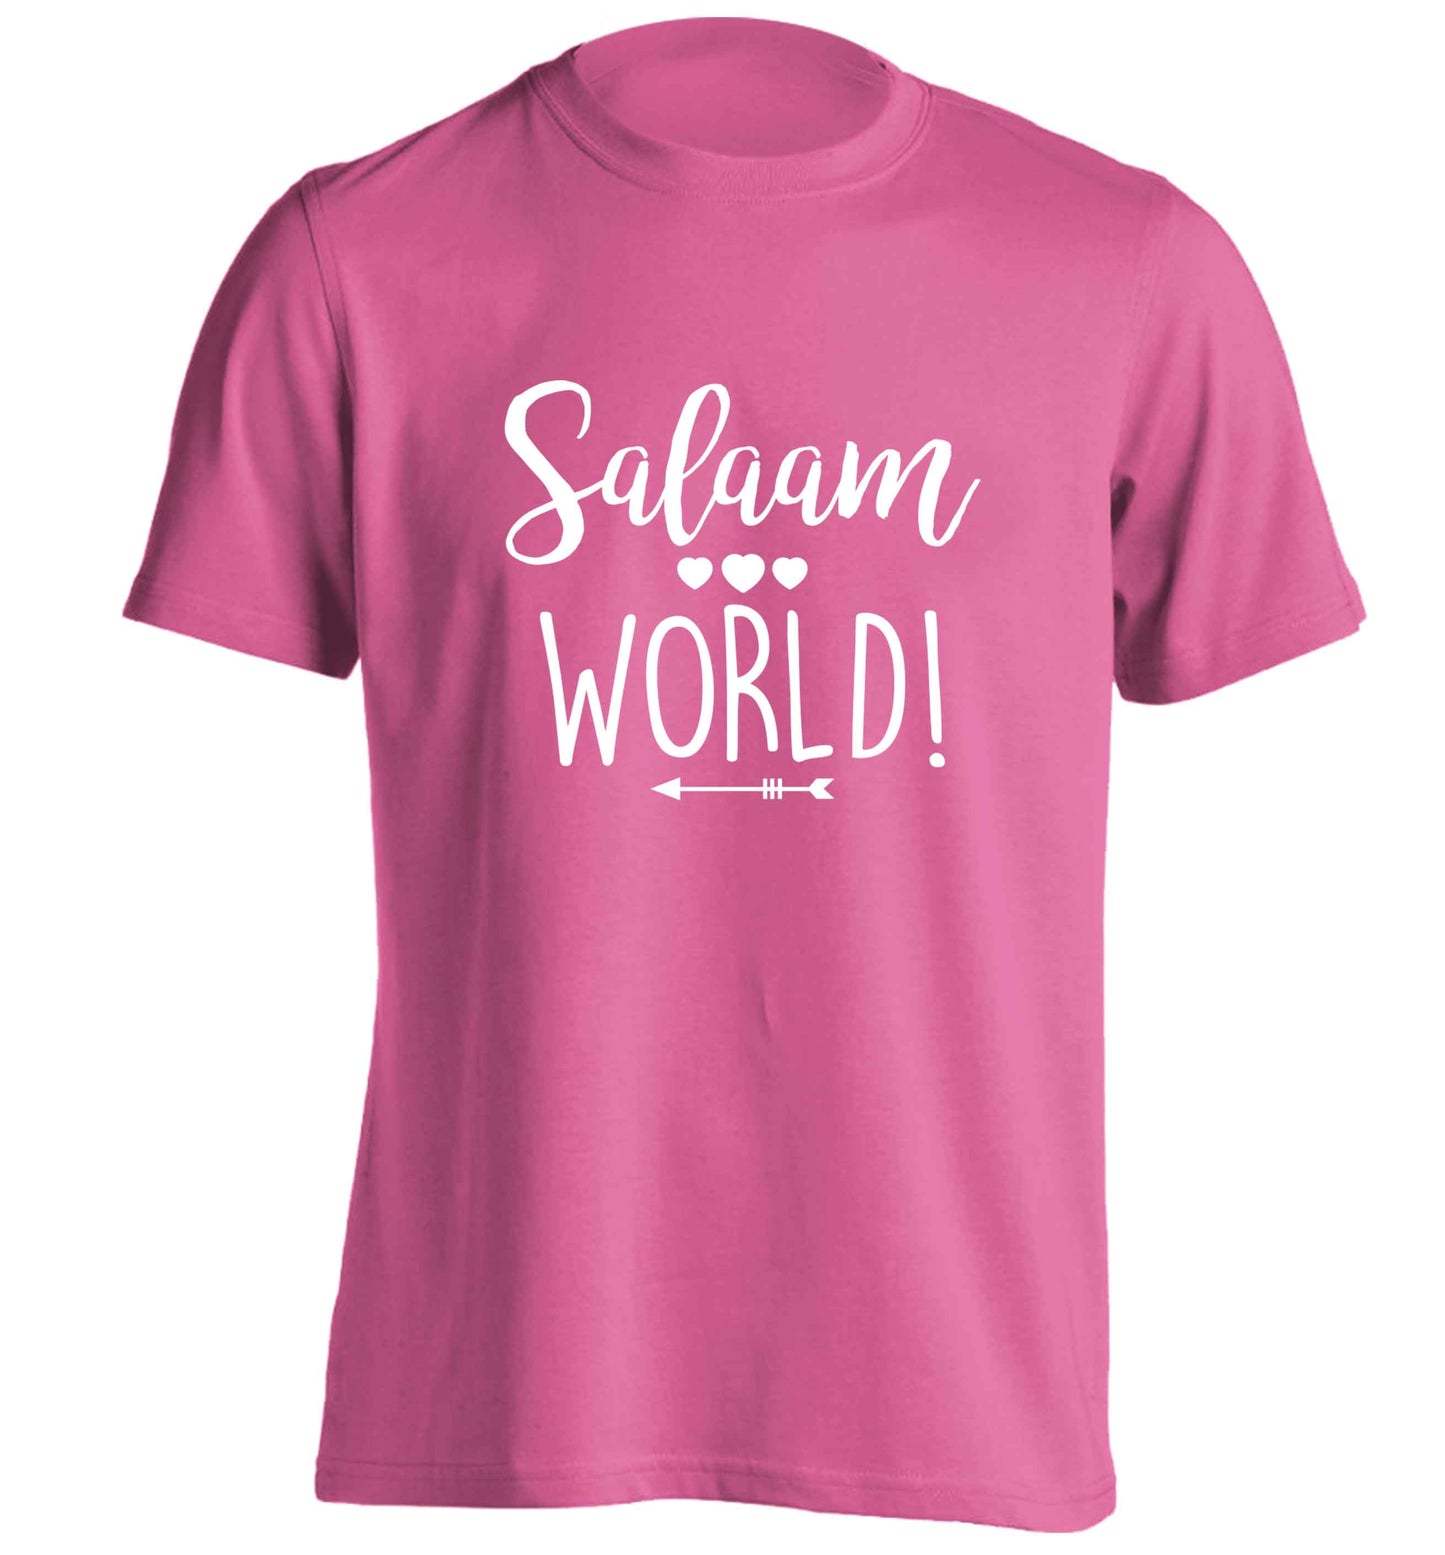 Salaam world adults unisex pink Tshirt 2XL